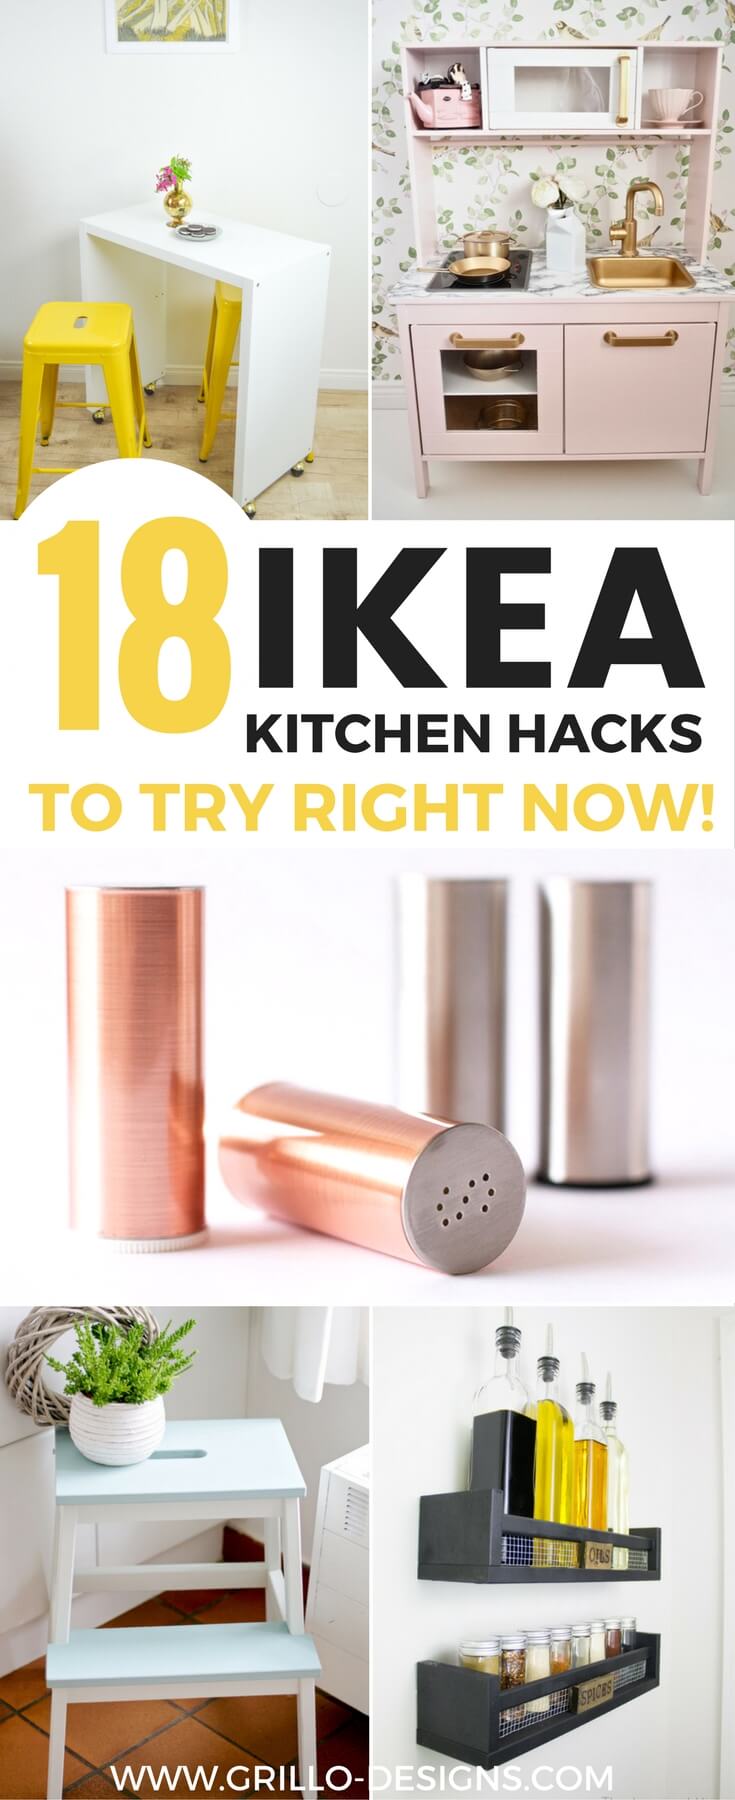 18 Simple IKEA Kitchen Hacks   Grillo Designs